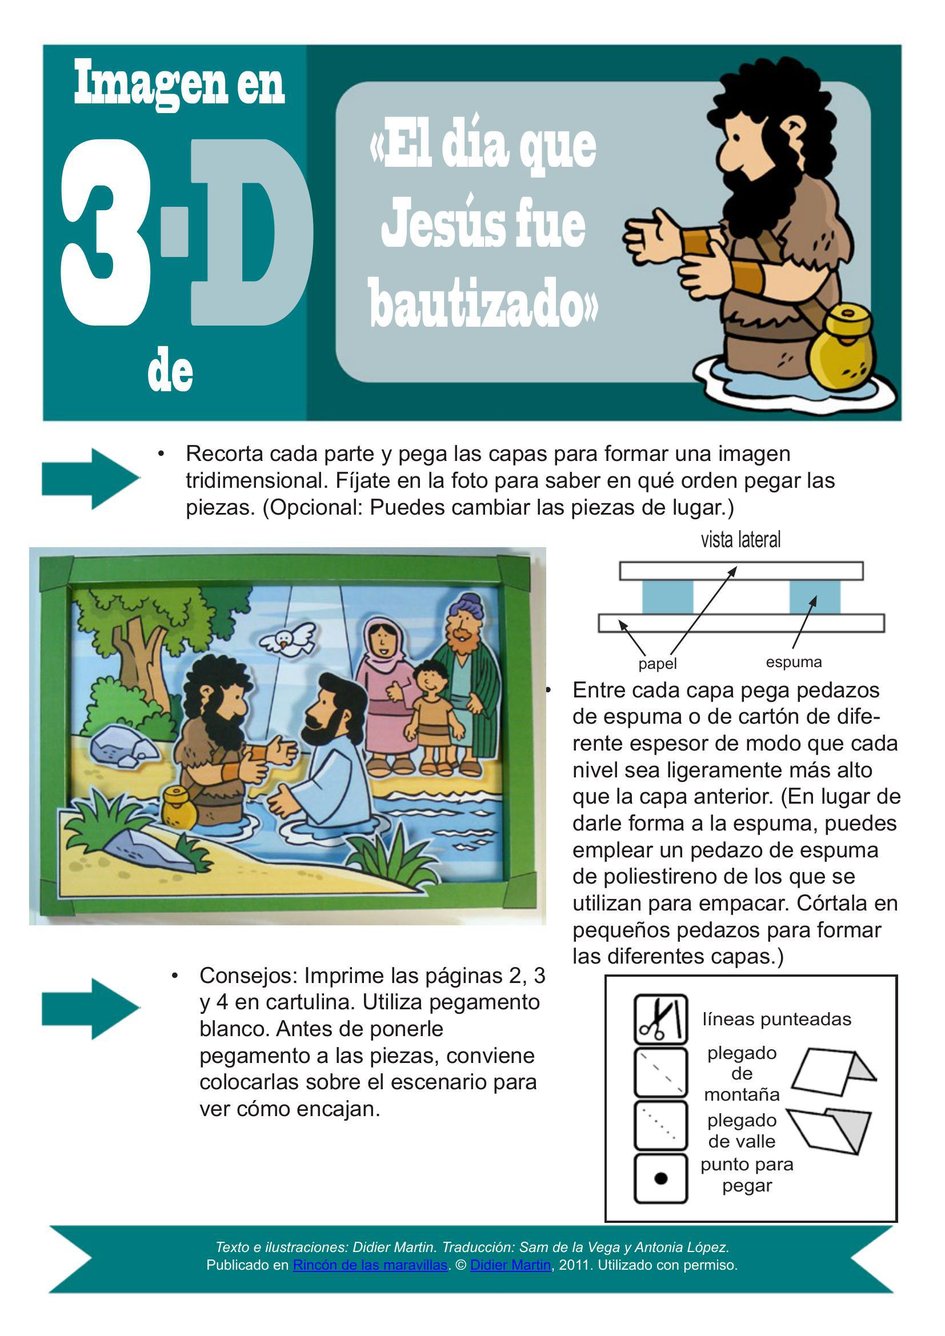 When Jesus Was Baptized Coloring Page And 3 D Picture Rincon De Las Maravillas